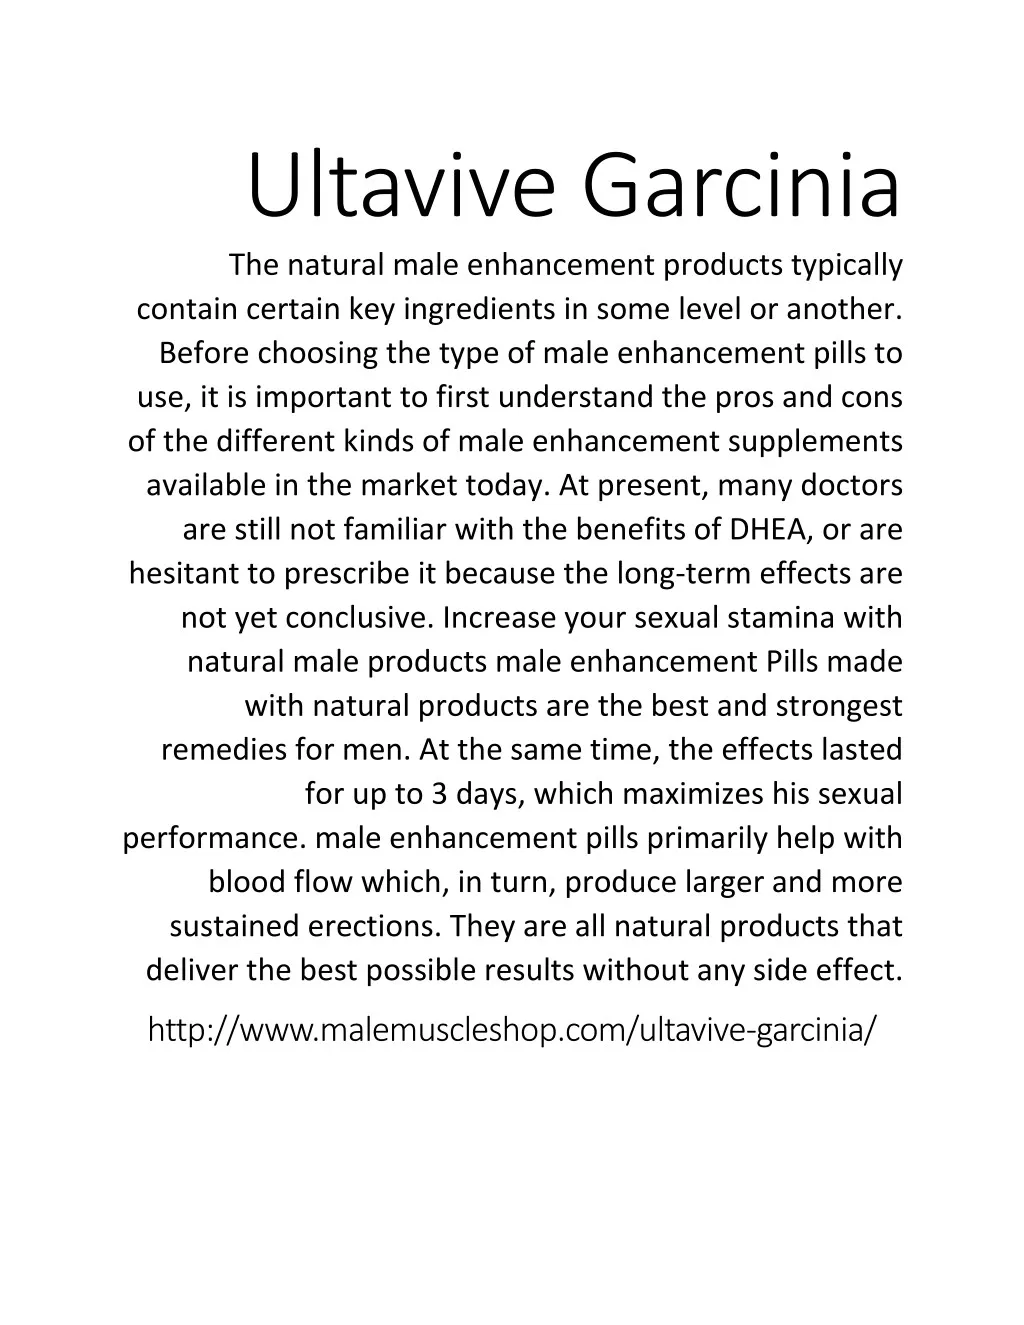 ultavive garcinia the natural male enhancement n.